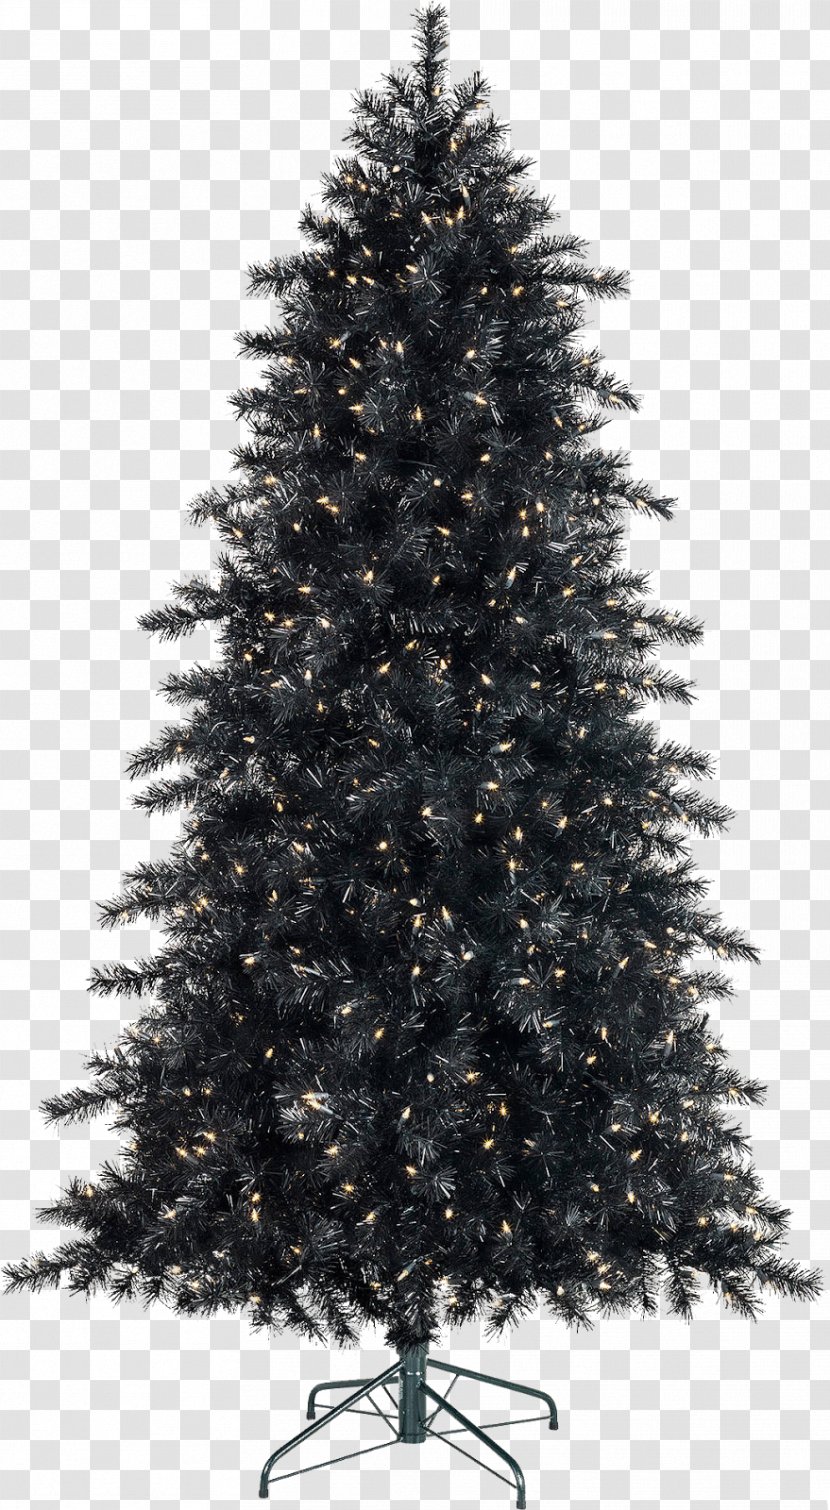 Artificial Christmas Tree Decoration Ornament - Evergreen Transparent PNG